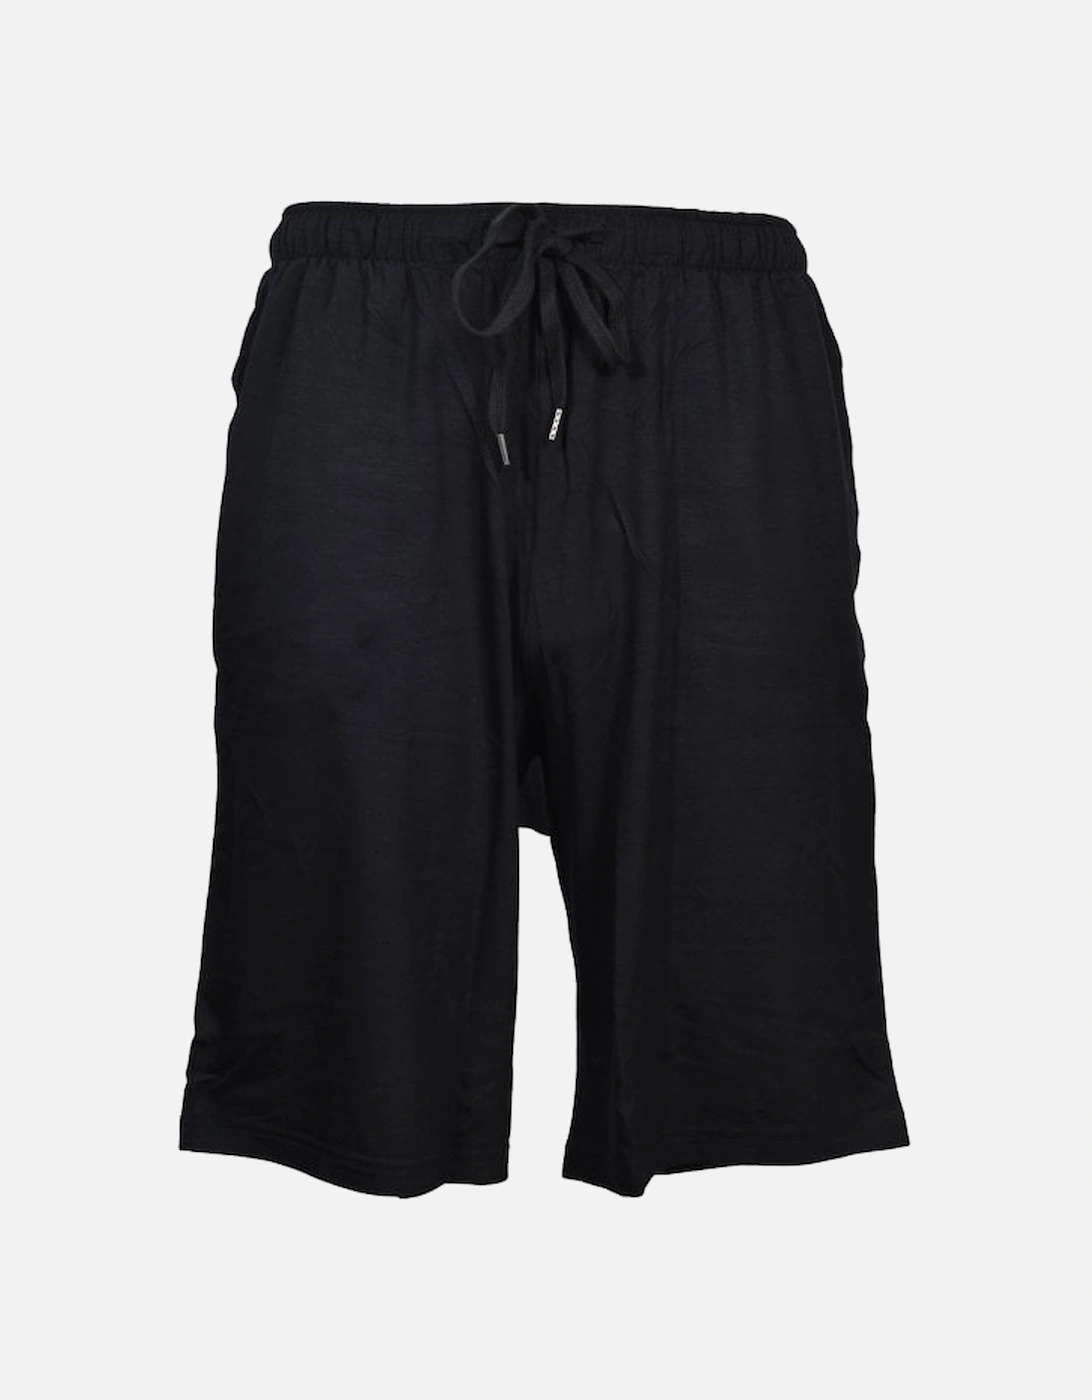 Micro Modal Lounge Shorts, Black, 10 of 9